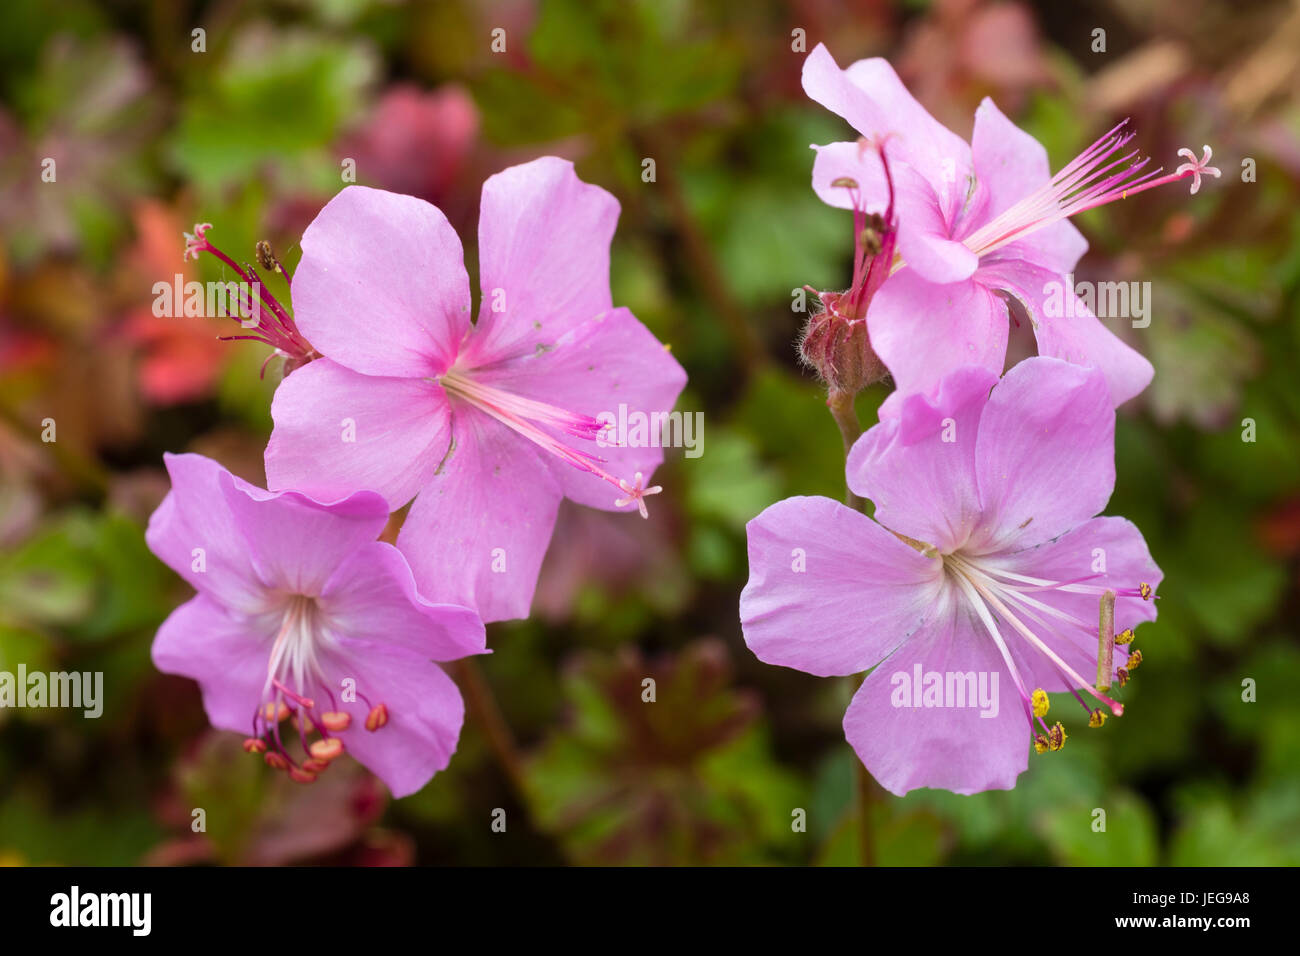 Pink flowers of the summer blooming hardy perennial cranesbill, Geranium dalmaticum Stock Photo